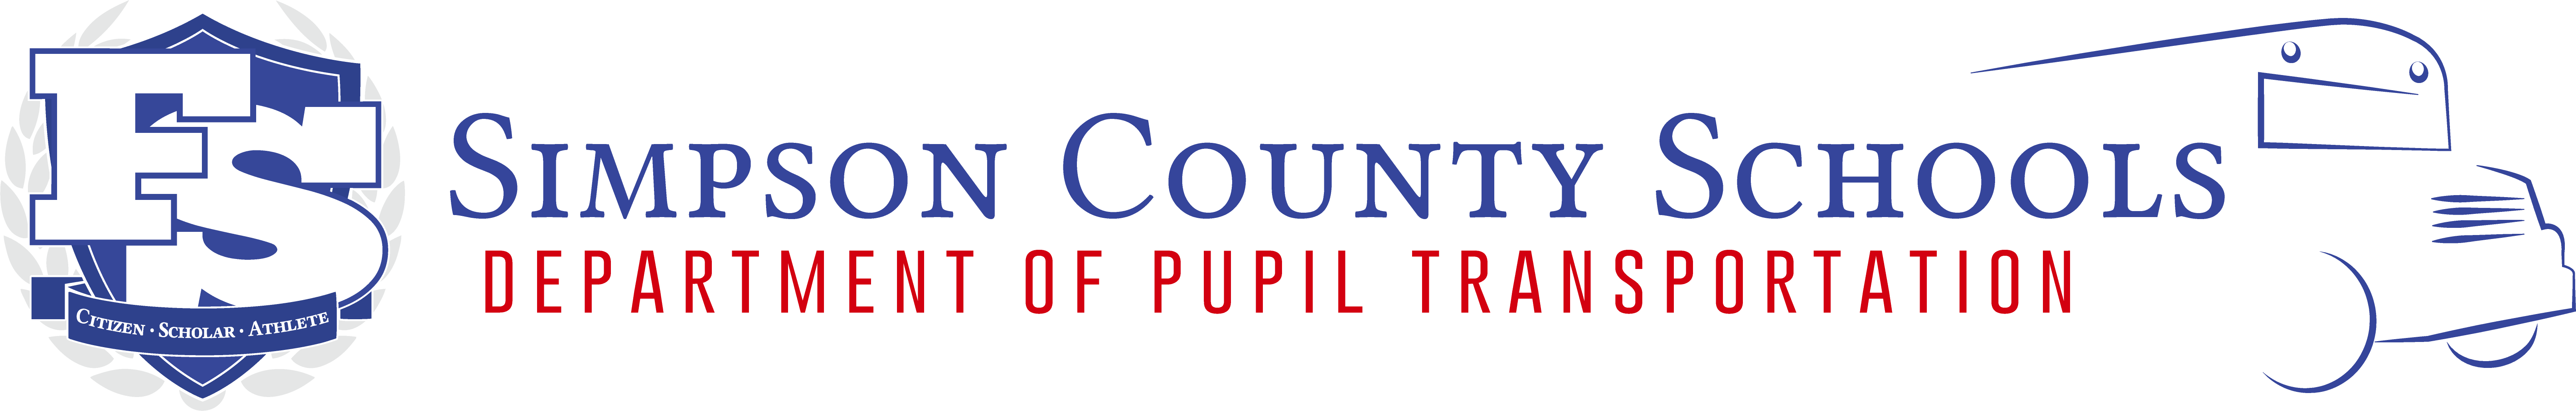 Transportation | Simpson County Schools